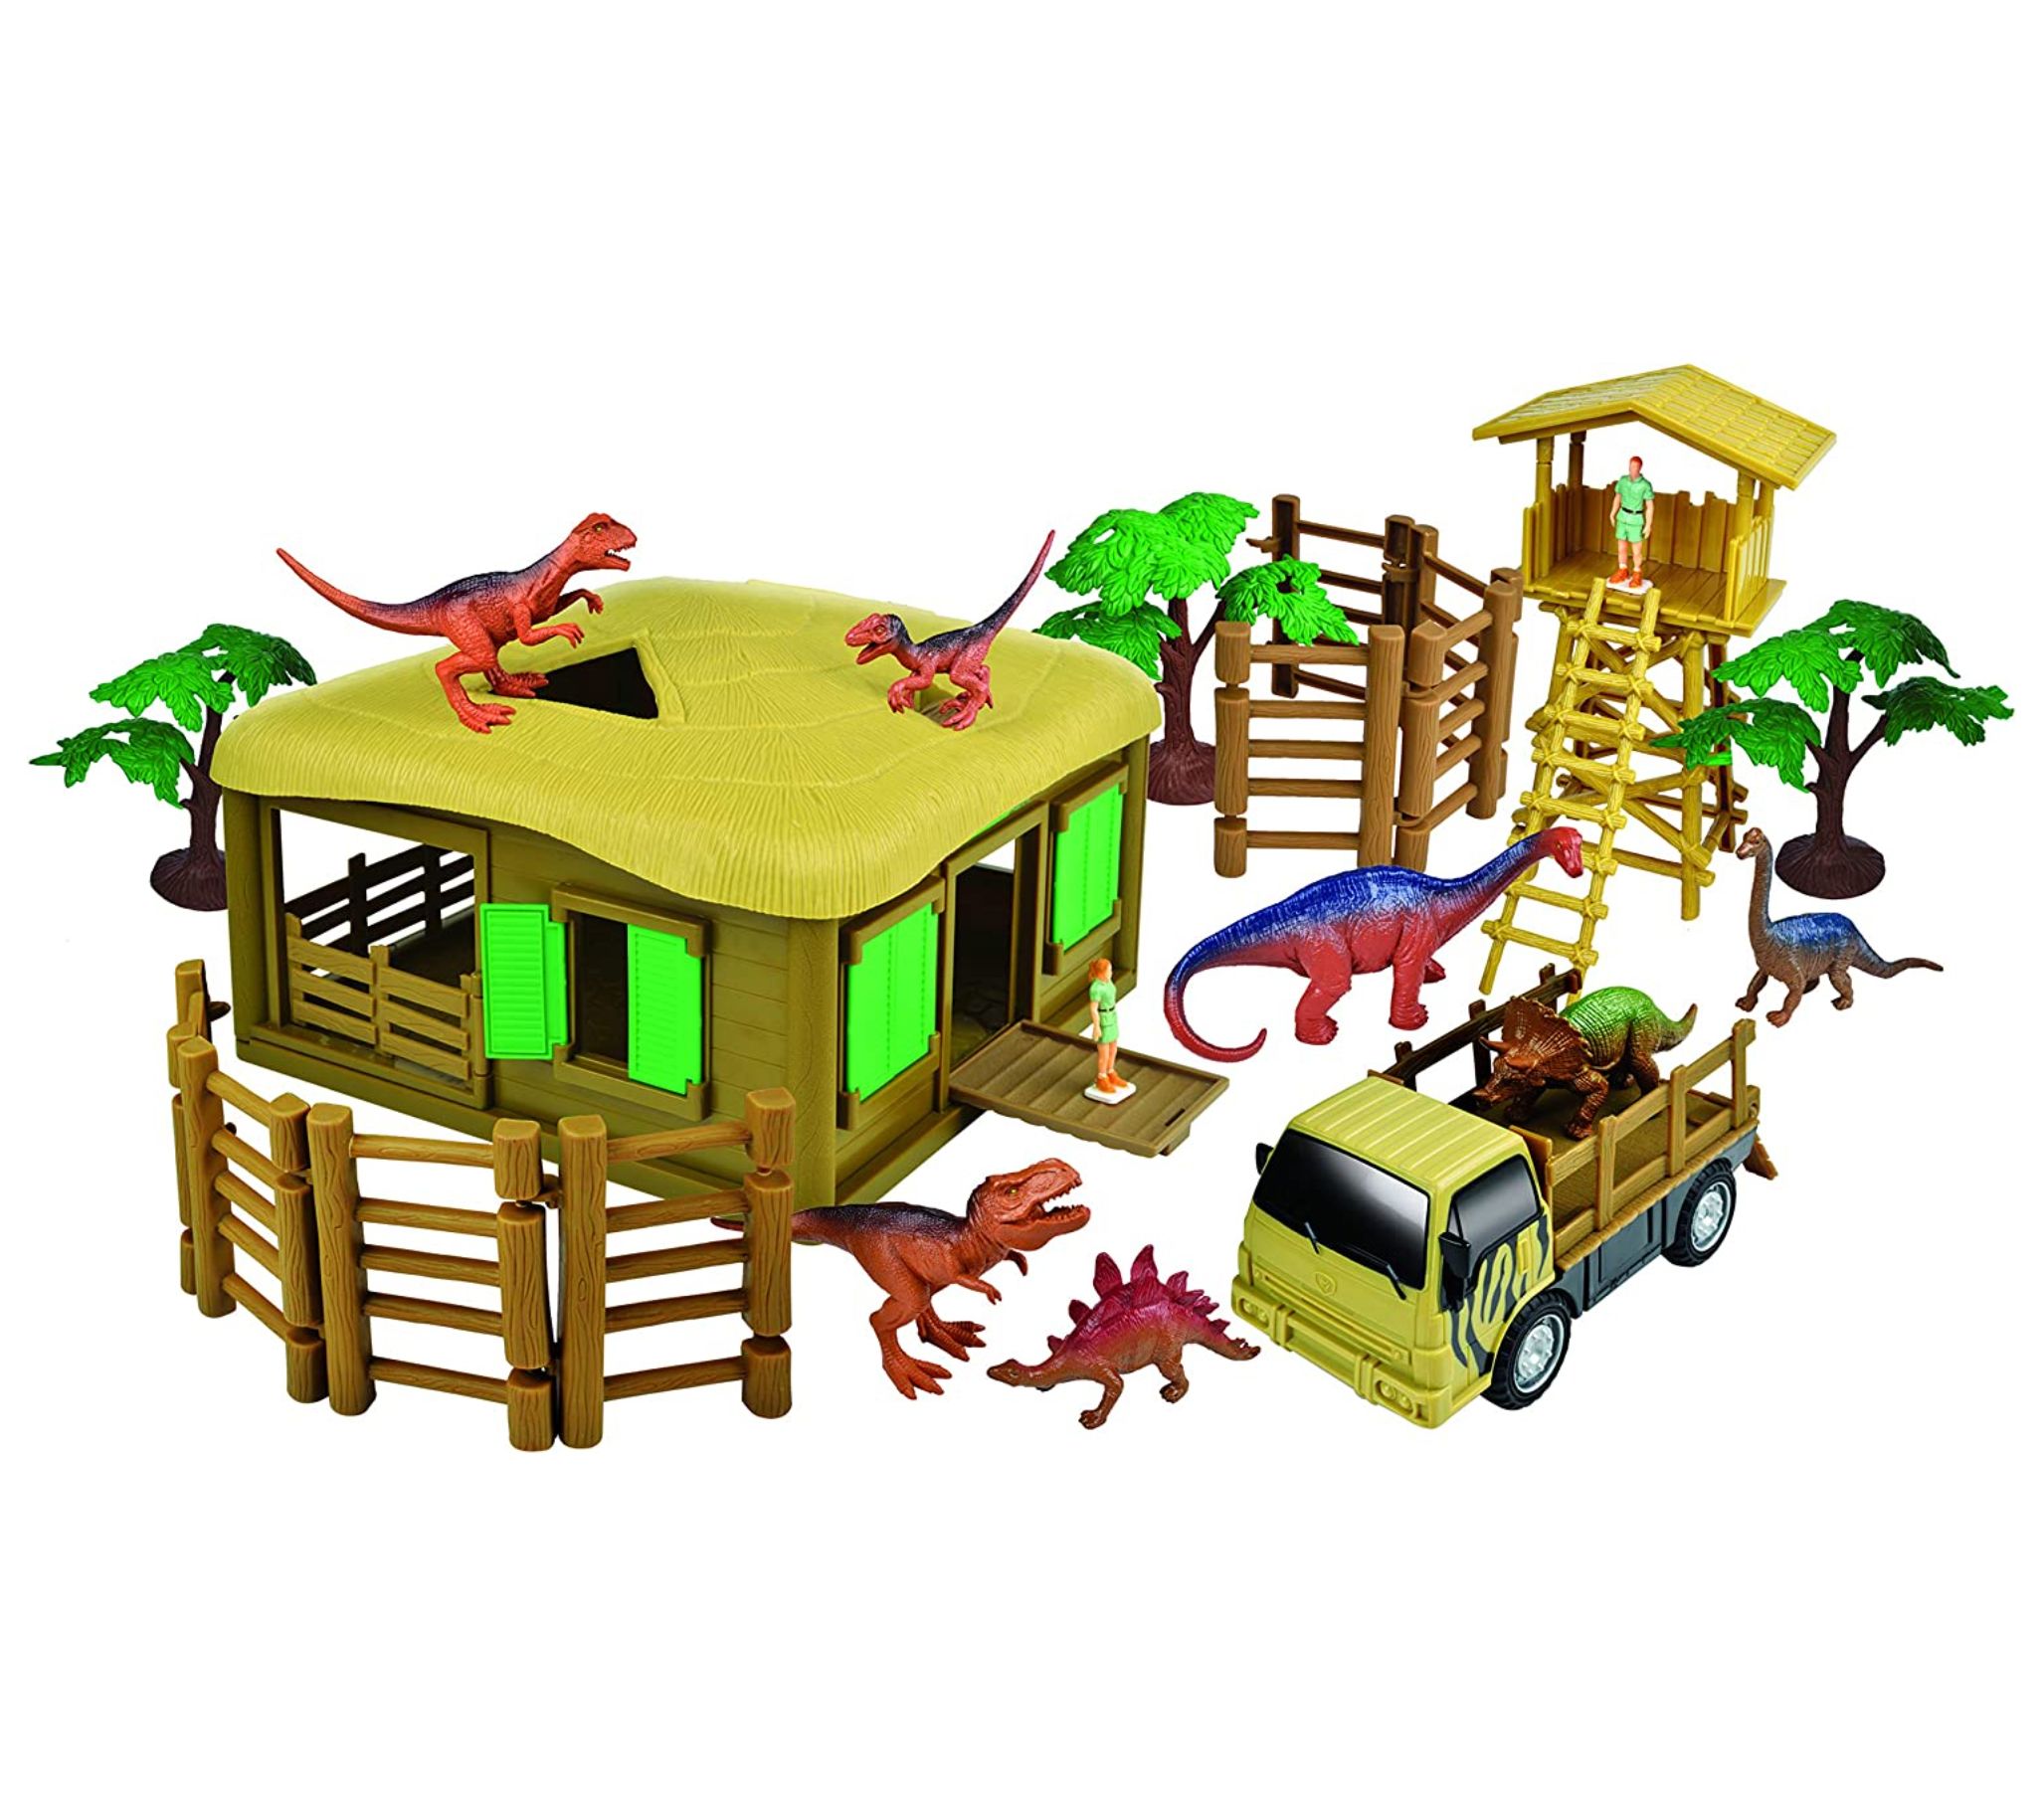 PLAYMOBIL Toddler Room Action Figure Set, 40 Pieces 